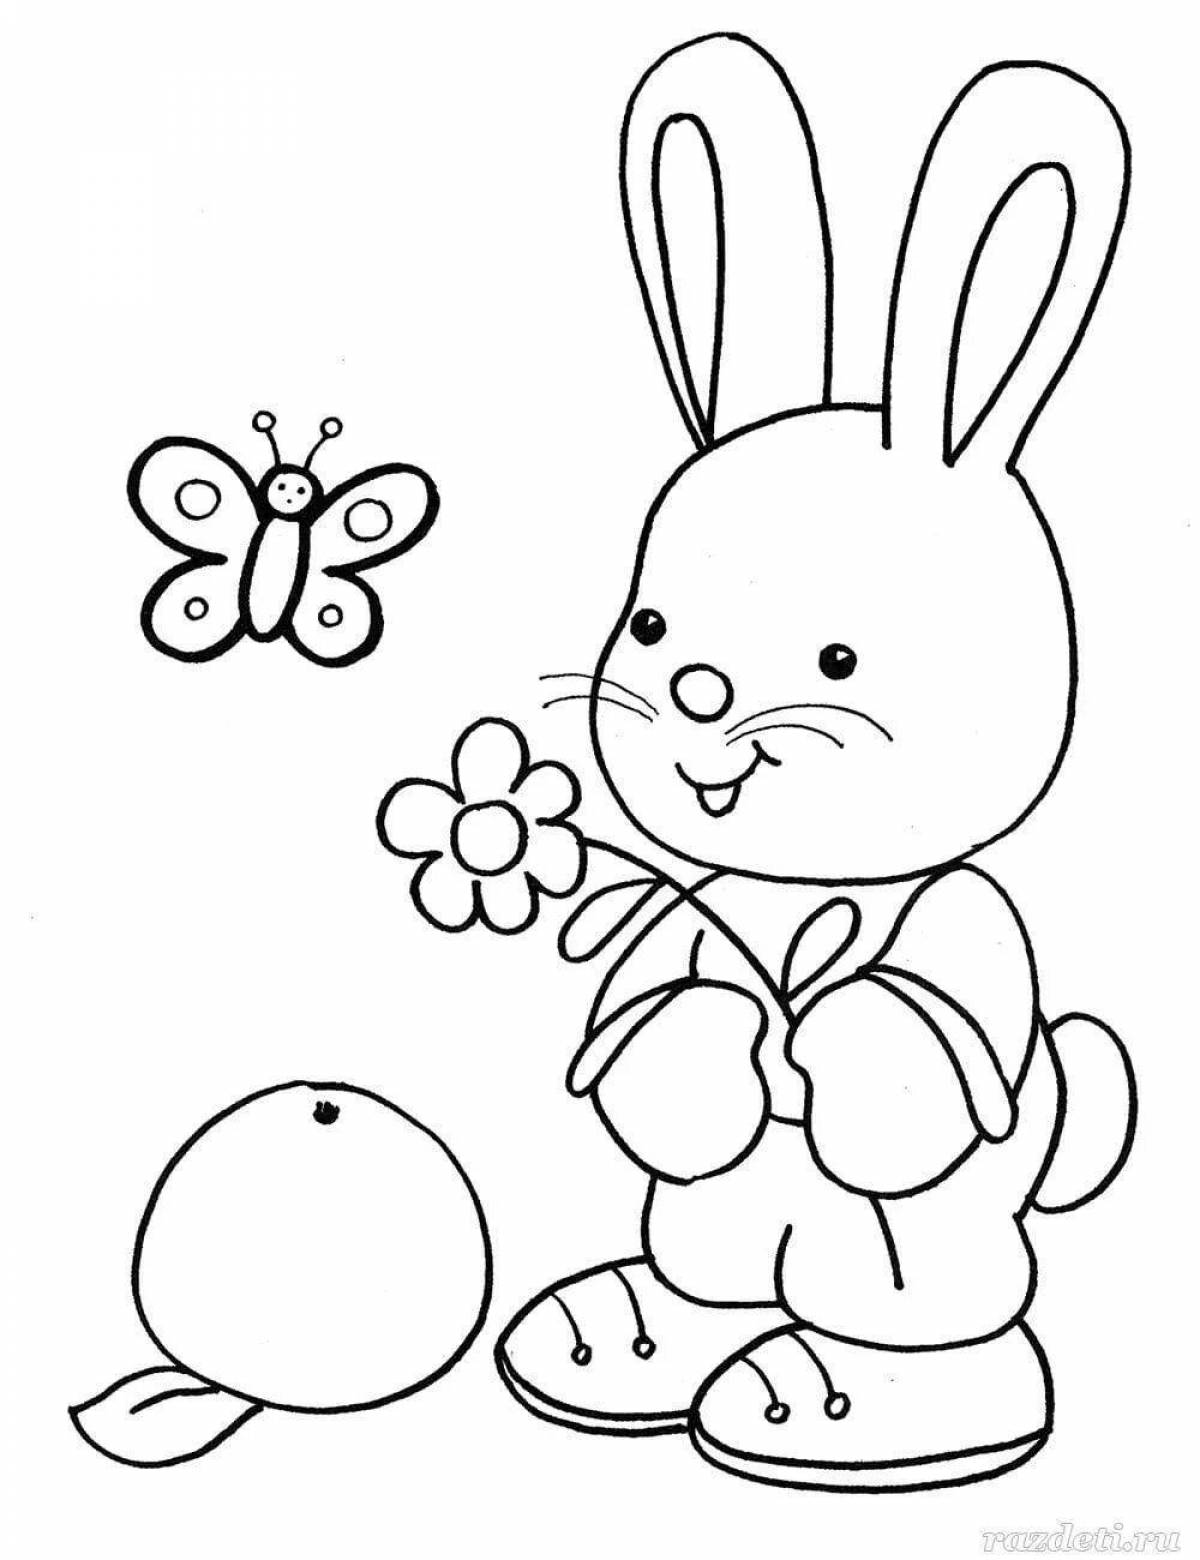 Fun coloring book for preschoolers